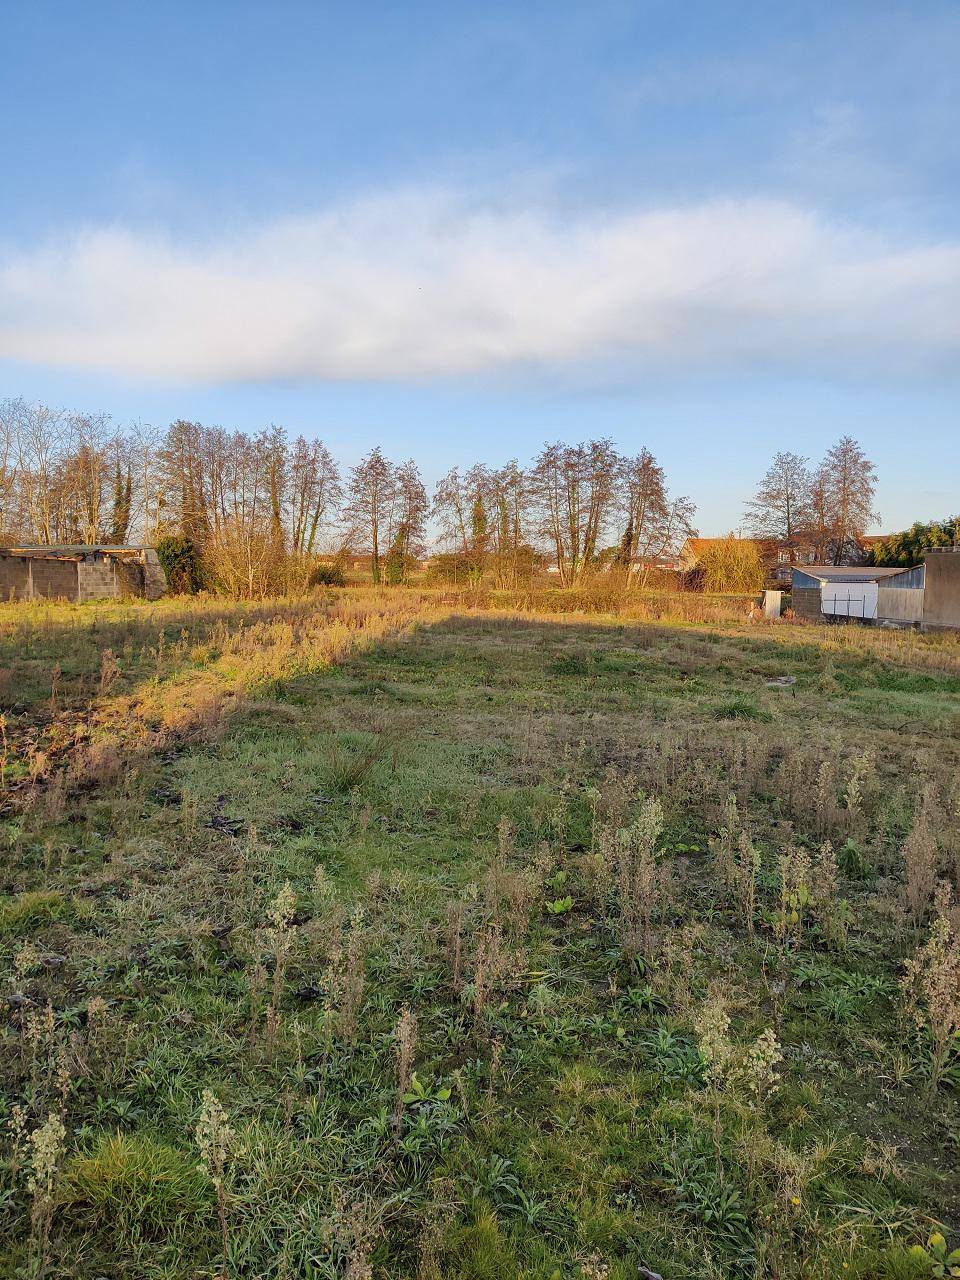 Terrain seul à Fatines en Sarthe (72) de 300 m² à vendre au prix de 30000€ - 3